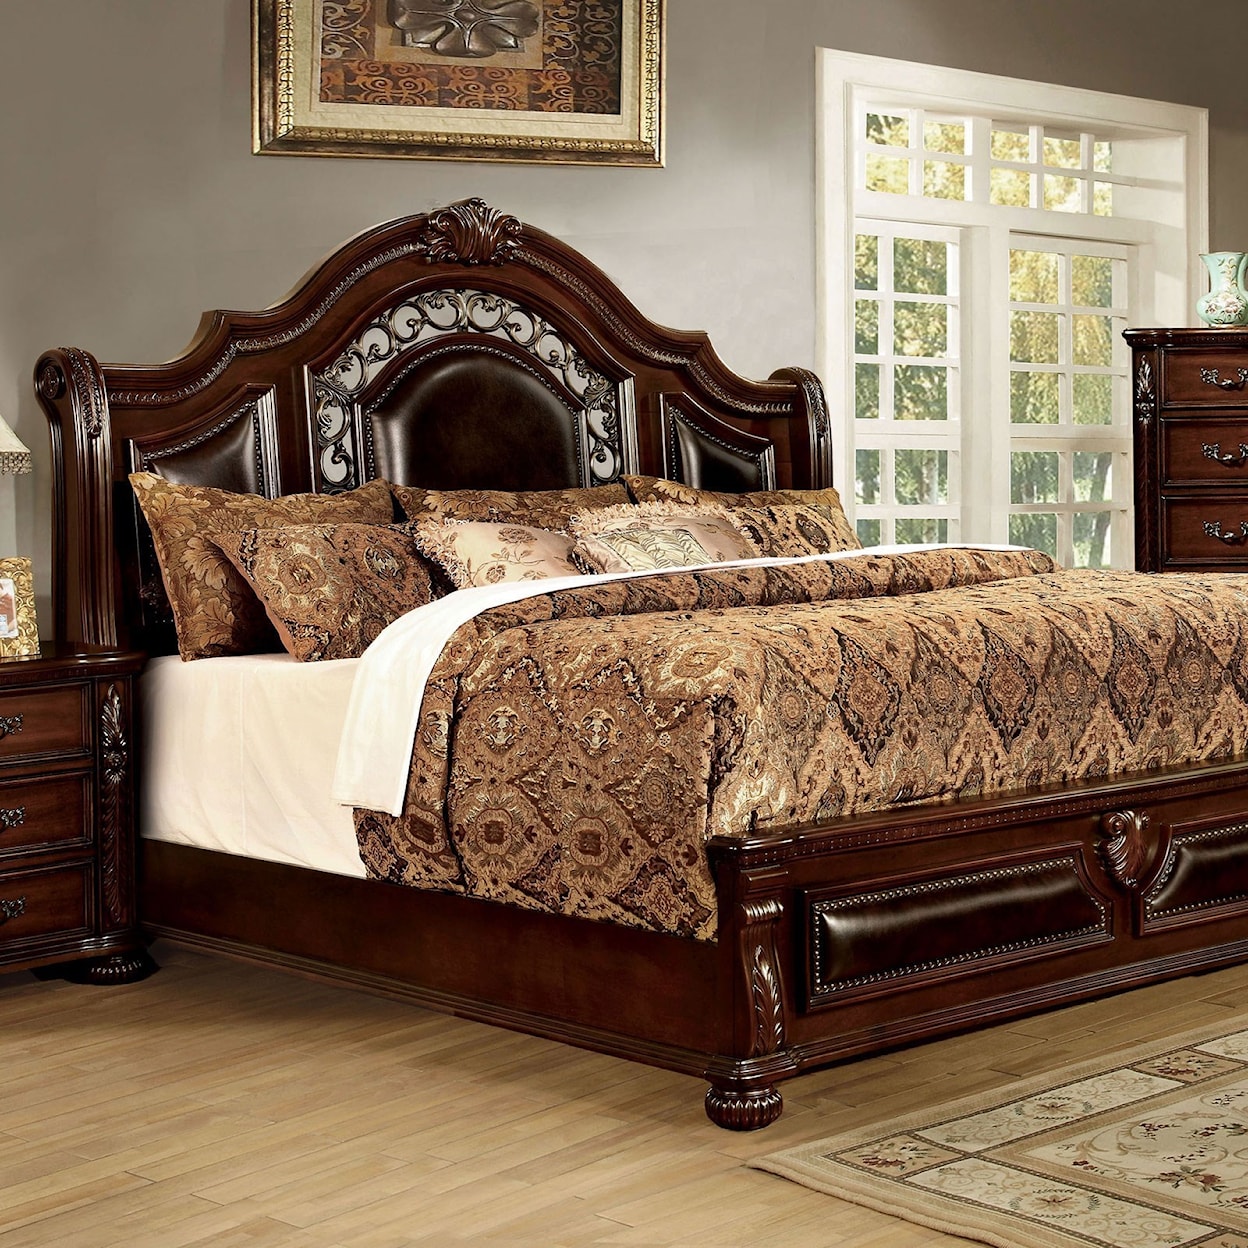 Furniture of America Flandreau King Panel Bed